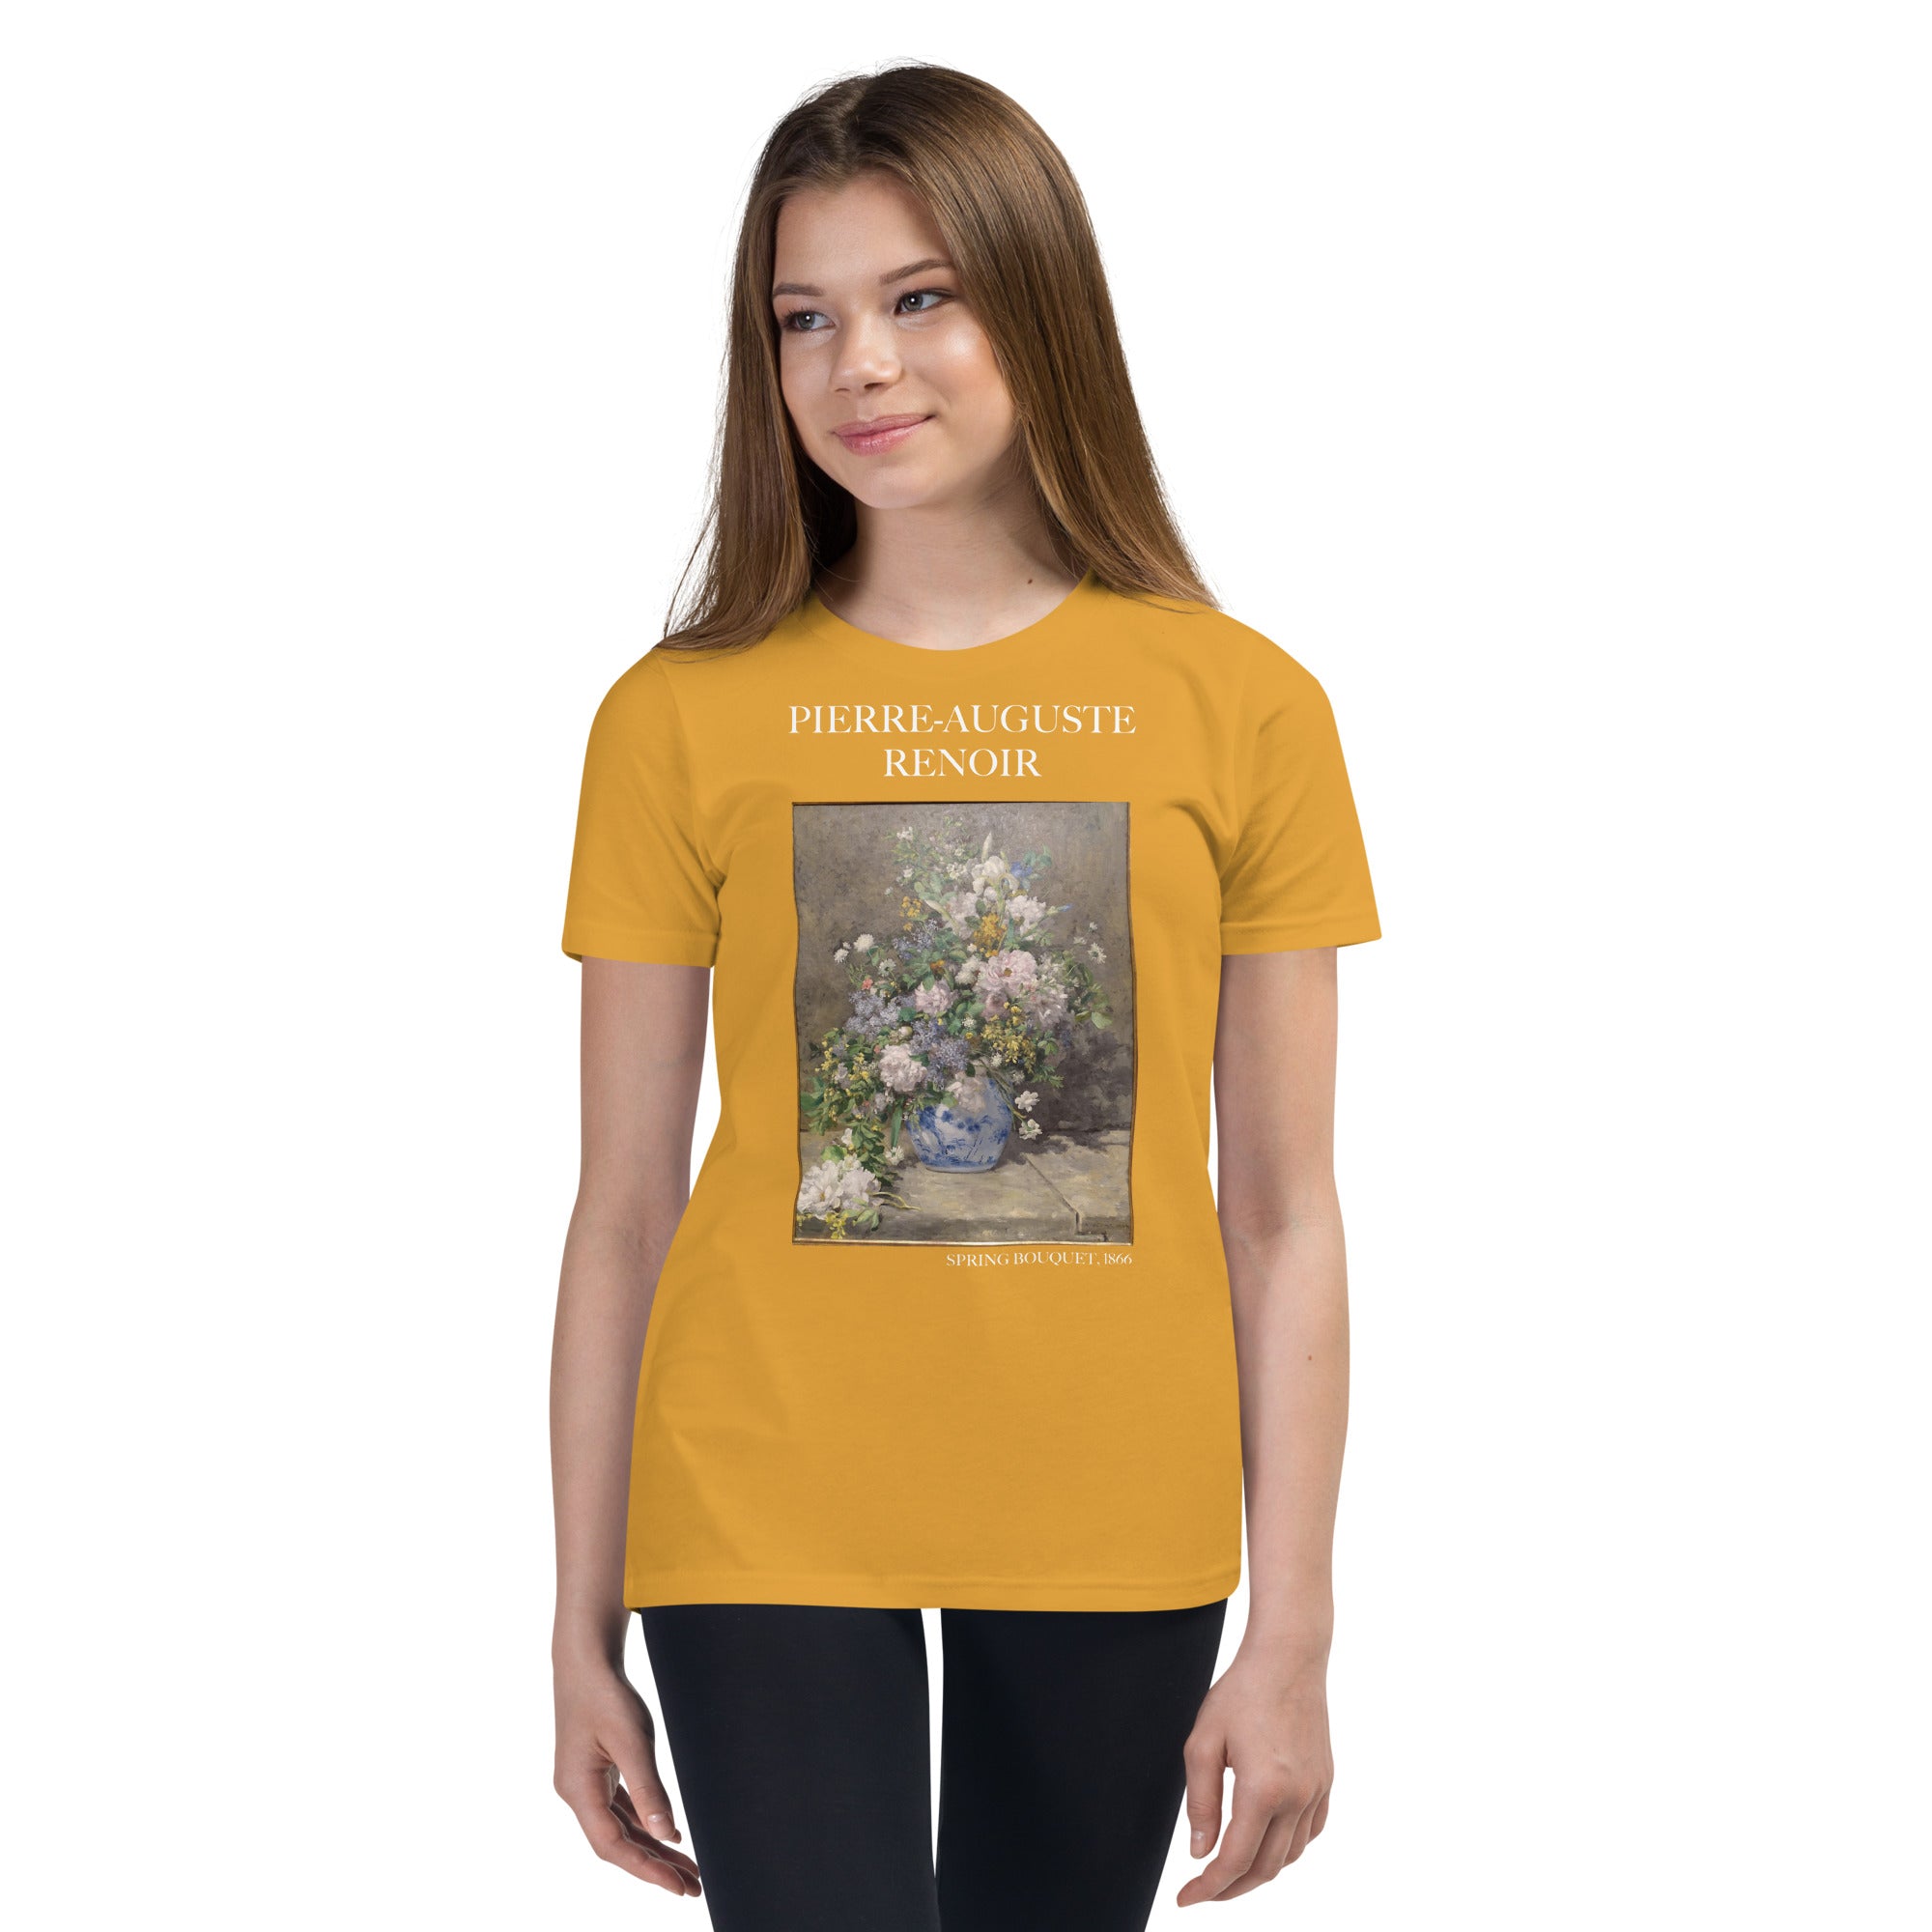 Pierre-Auguste Renoir 'Spring Bouquet' Famous Painting Short Sleeve T-Shirt | Premium Youth Art Tee